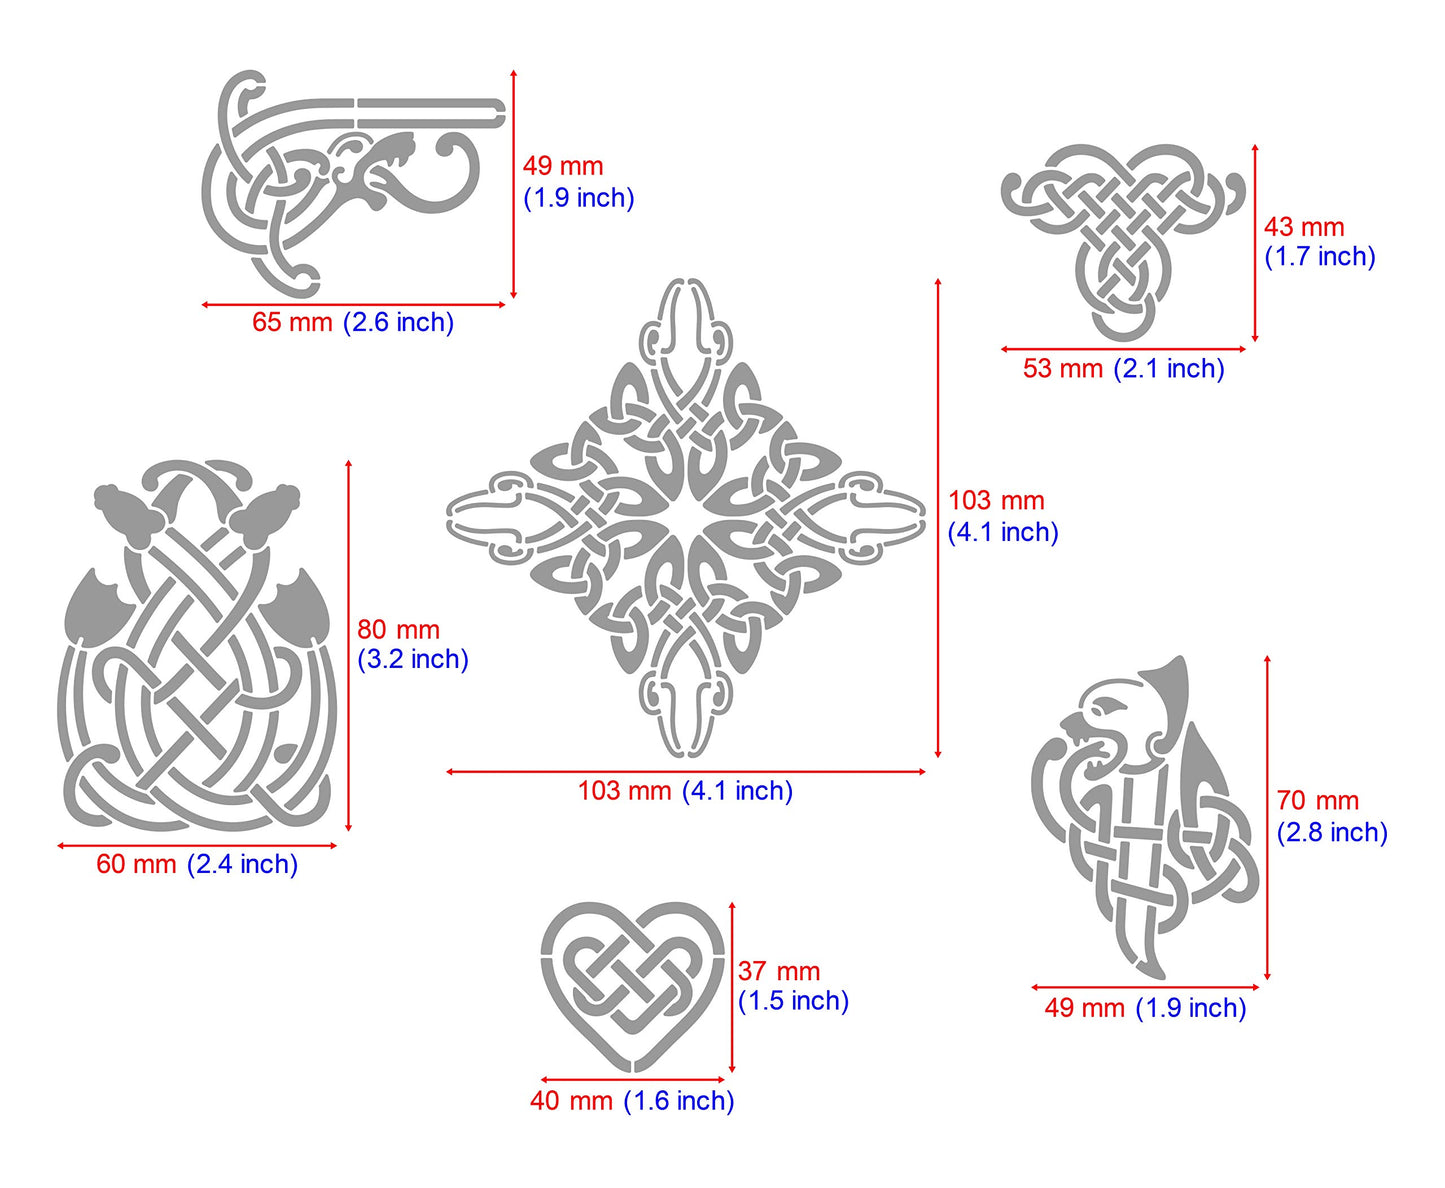 Aleks Melnyk #39.2 Metal Journal Stencil, Celtic Knot, Dragon, Scandinavian, Viking Symbols, Stainless Steel Stencil 1 PCS, Template Tool for Wood